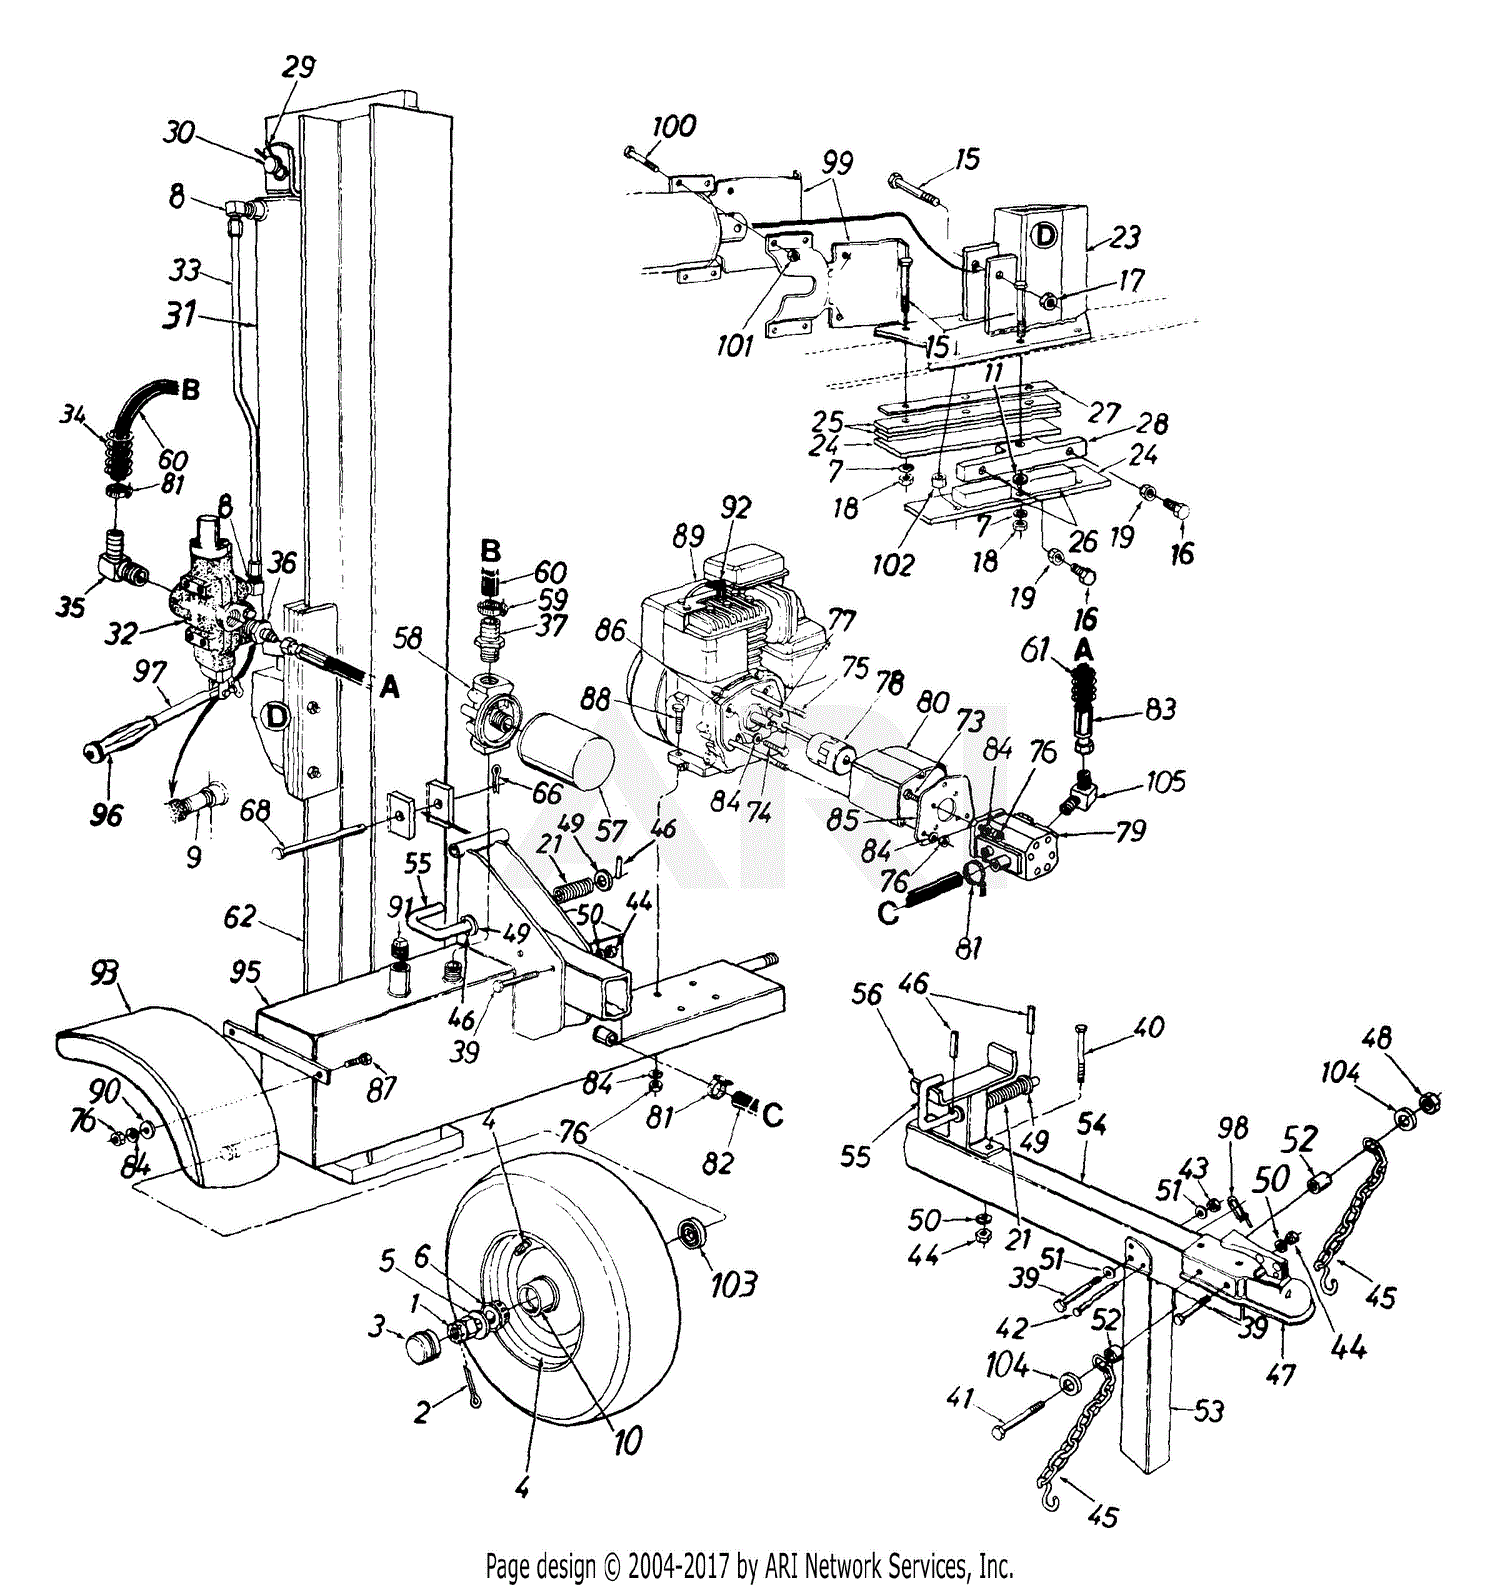 [DIAGRAM] Mossberg 22 Parts Diagram - MYDIAGRAM.ONLINE